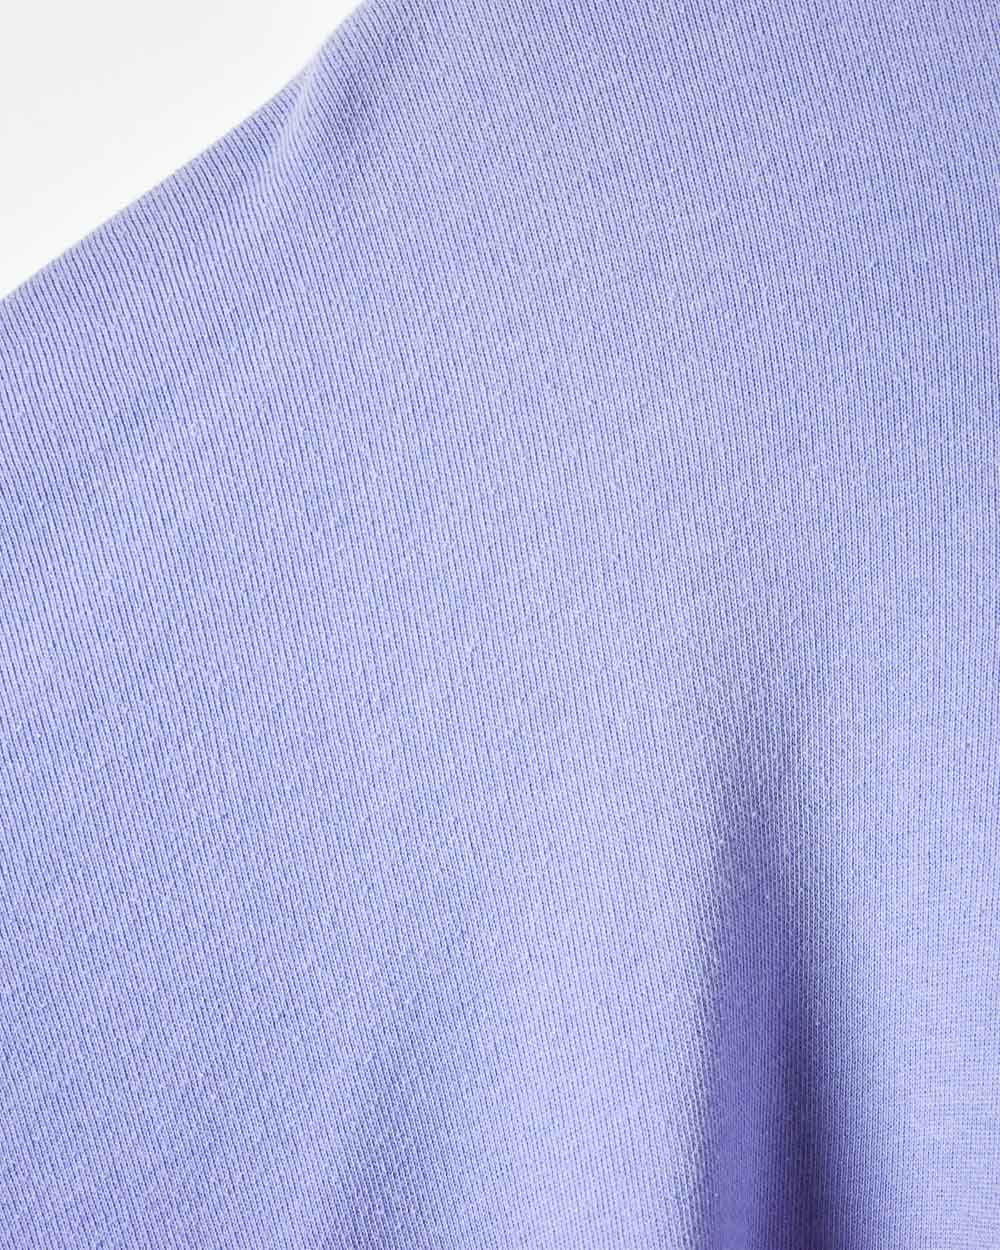 Purple Adidas Hoodie - X-Large